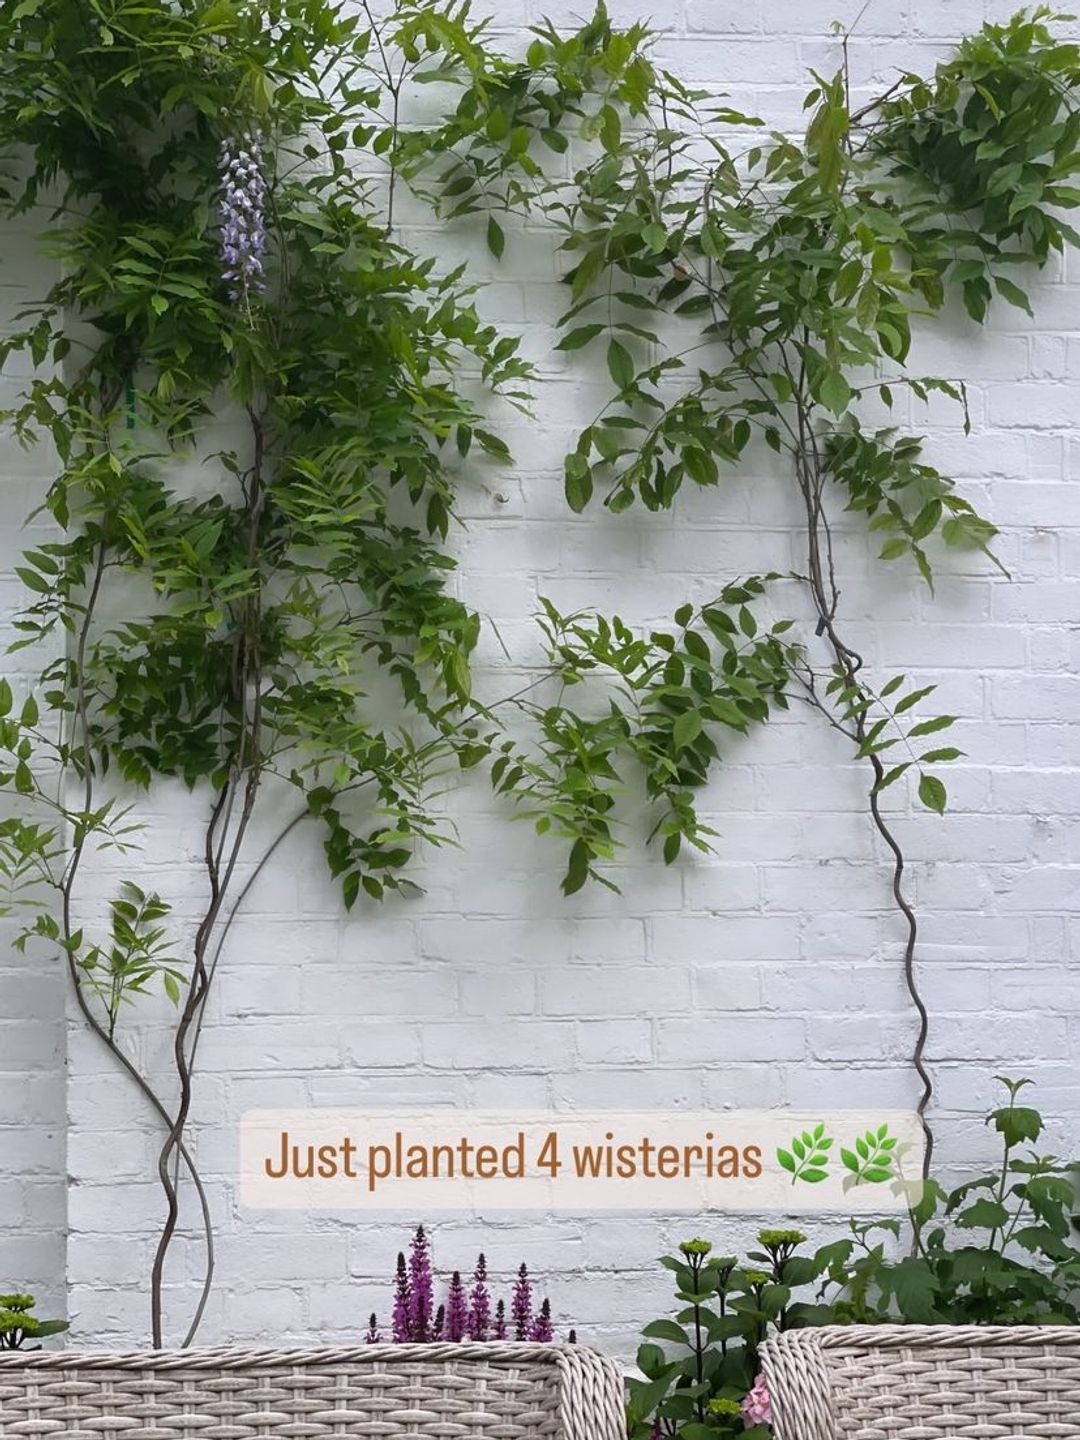 Shirlie Kemp's wisteria outside her home